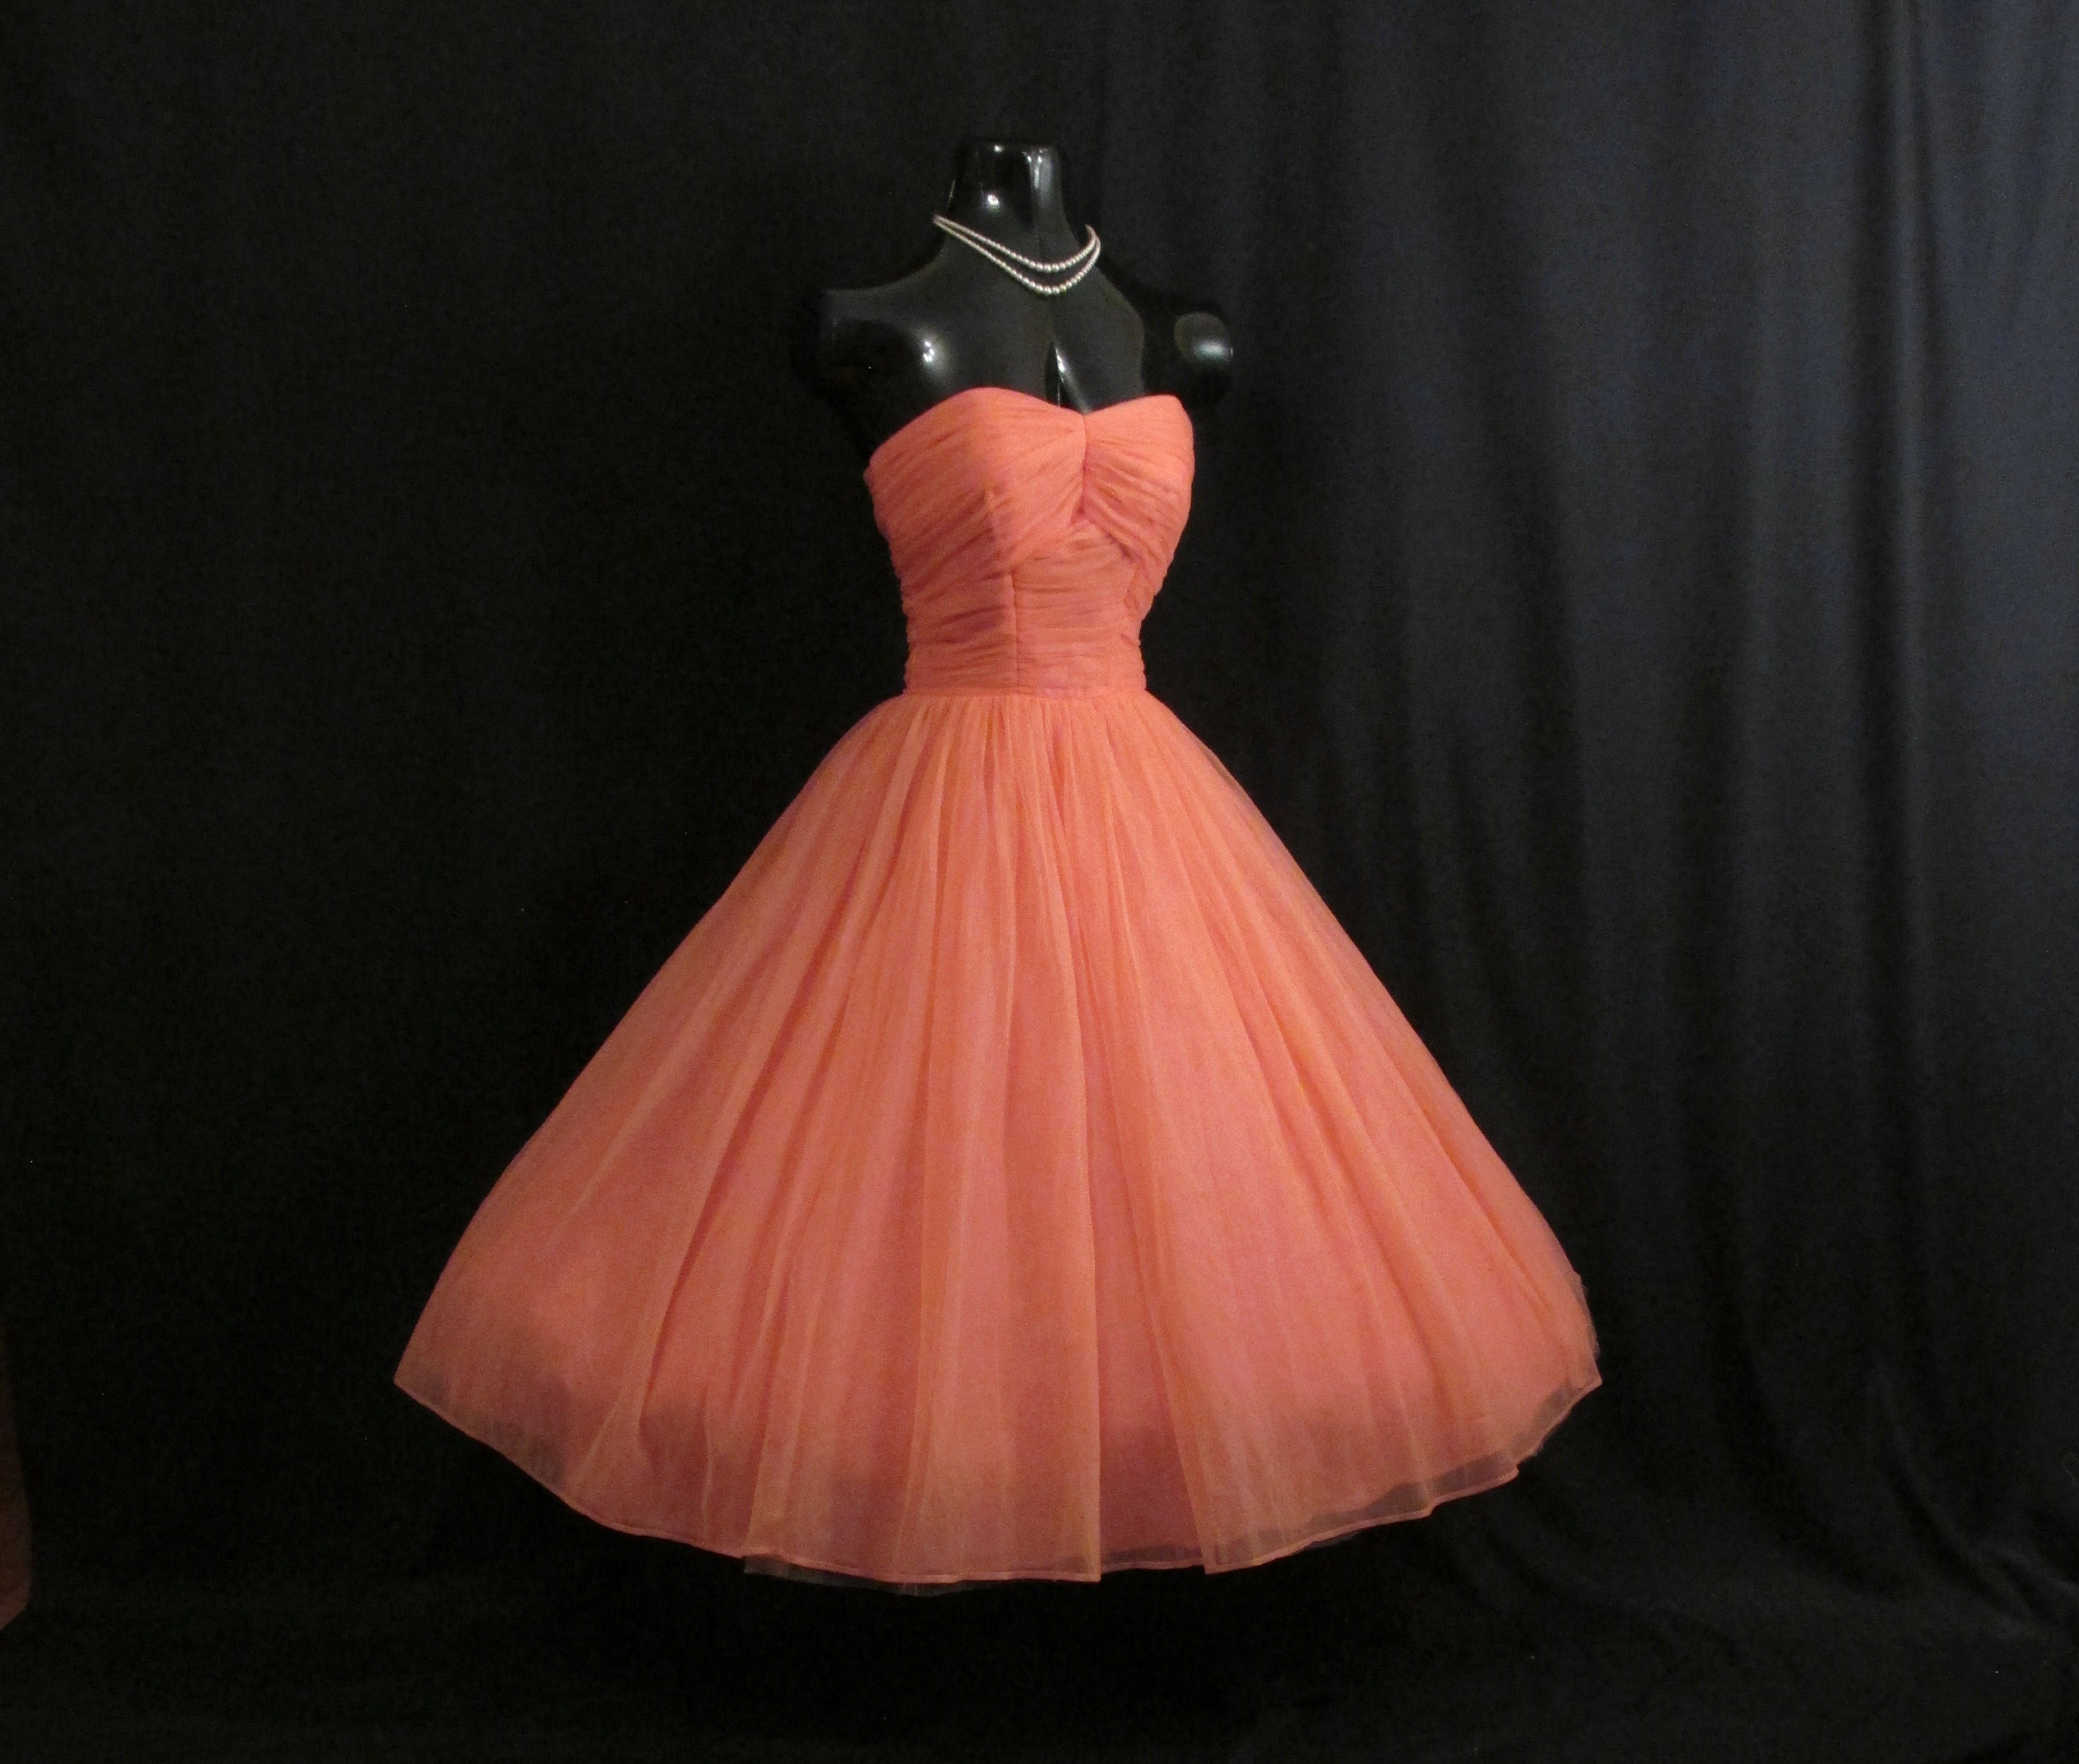 5 Under $50: Tangerine Tango  Pleated skater dress, Latest